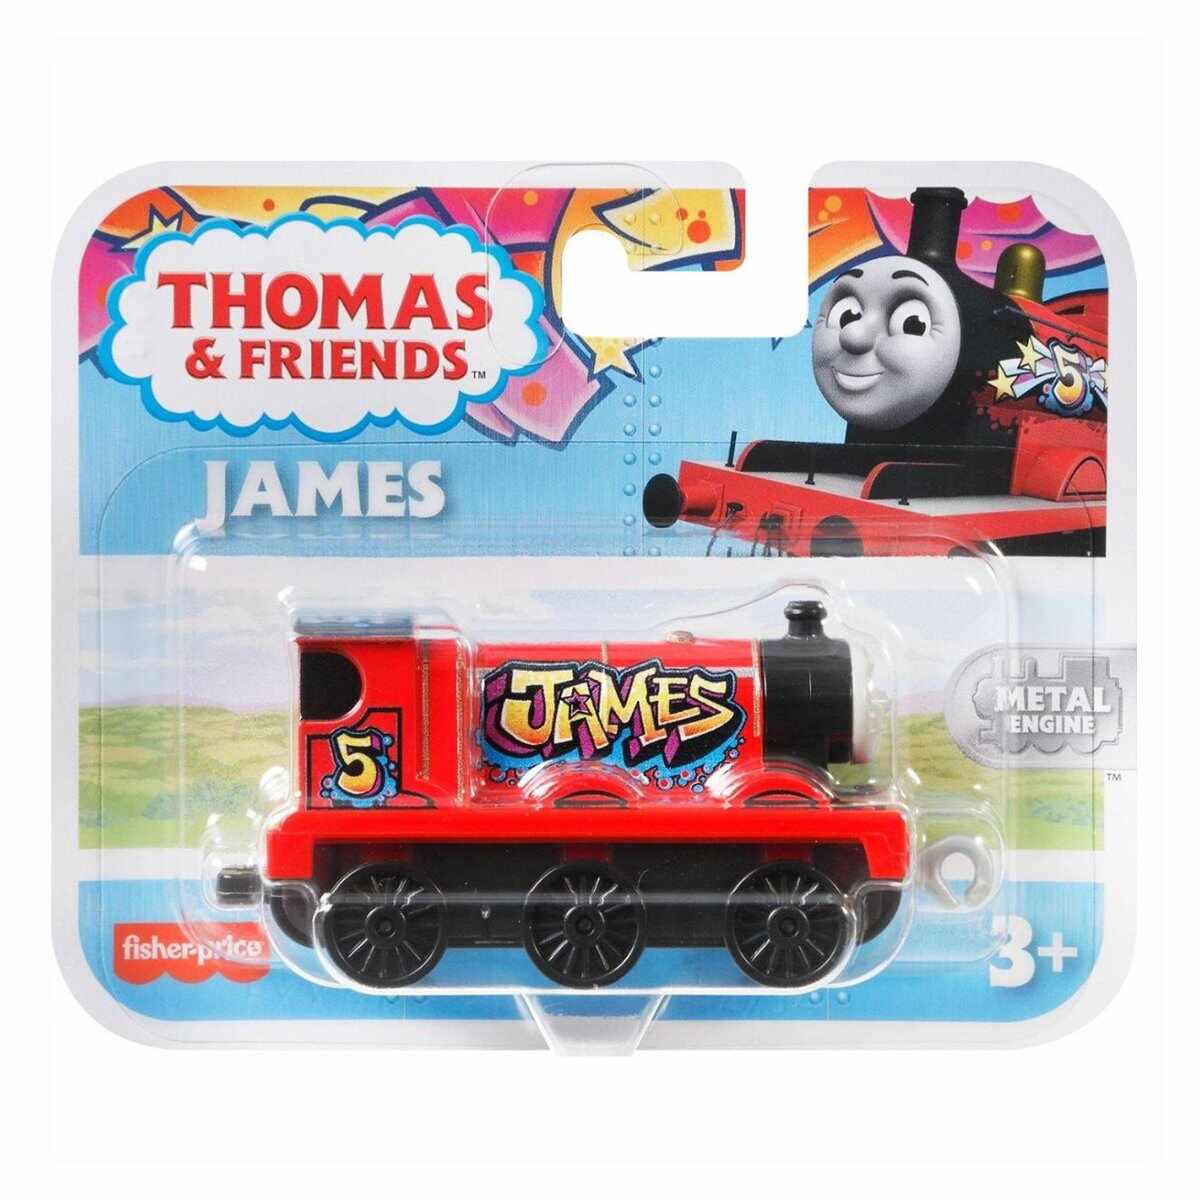 Trenulet metalic Thomas and Friends, Thomas GYV78